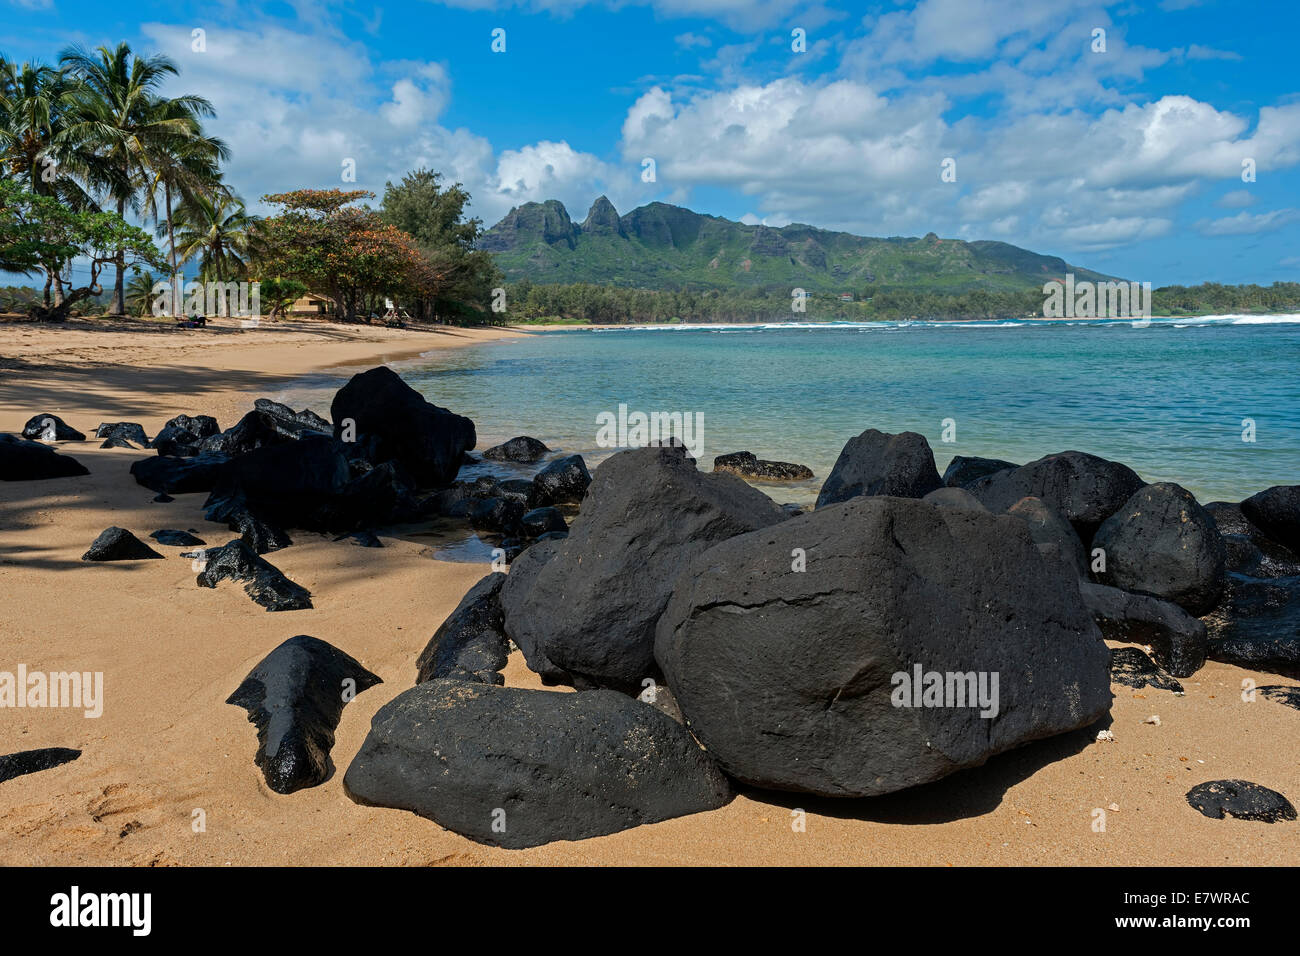 Boulders on the beach, Anahola Bay, Anahola, Kaua'i, Hawaii, United States Stock Photo